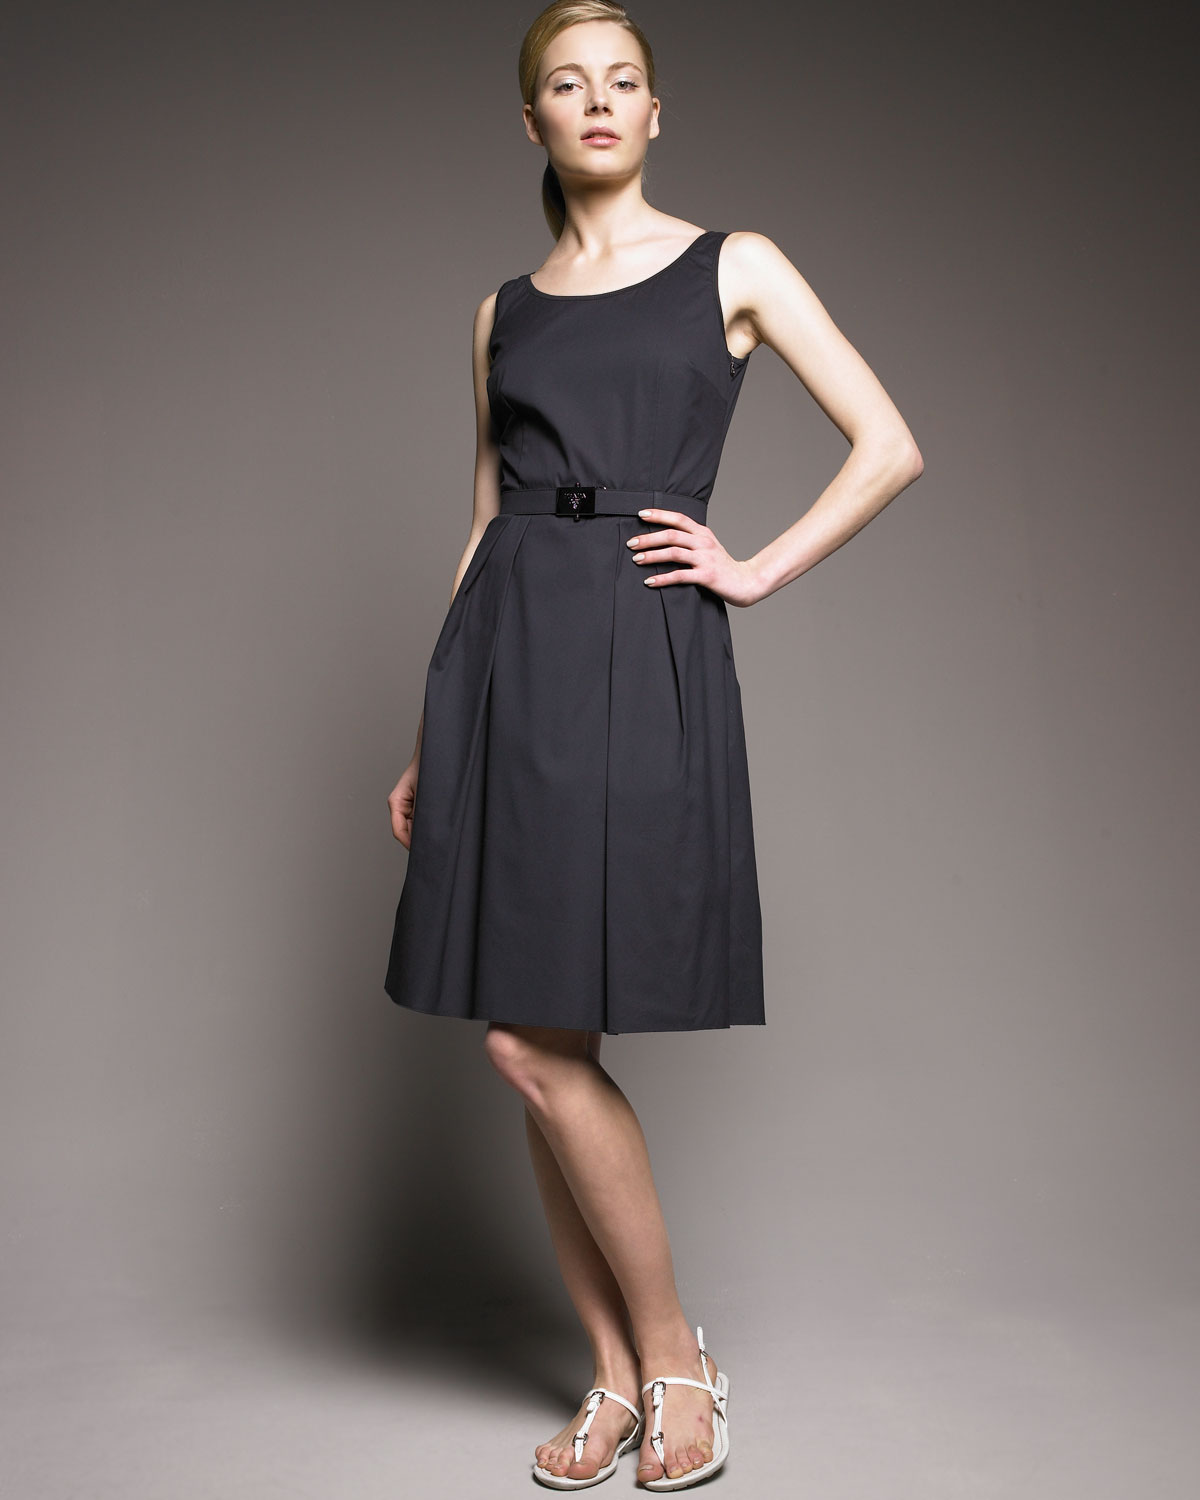 Lyst - Prada Scoop-neck Dress in Black